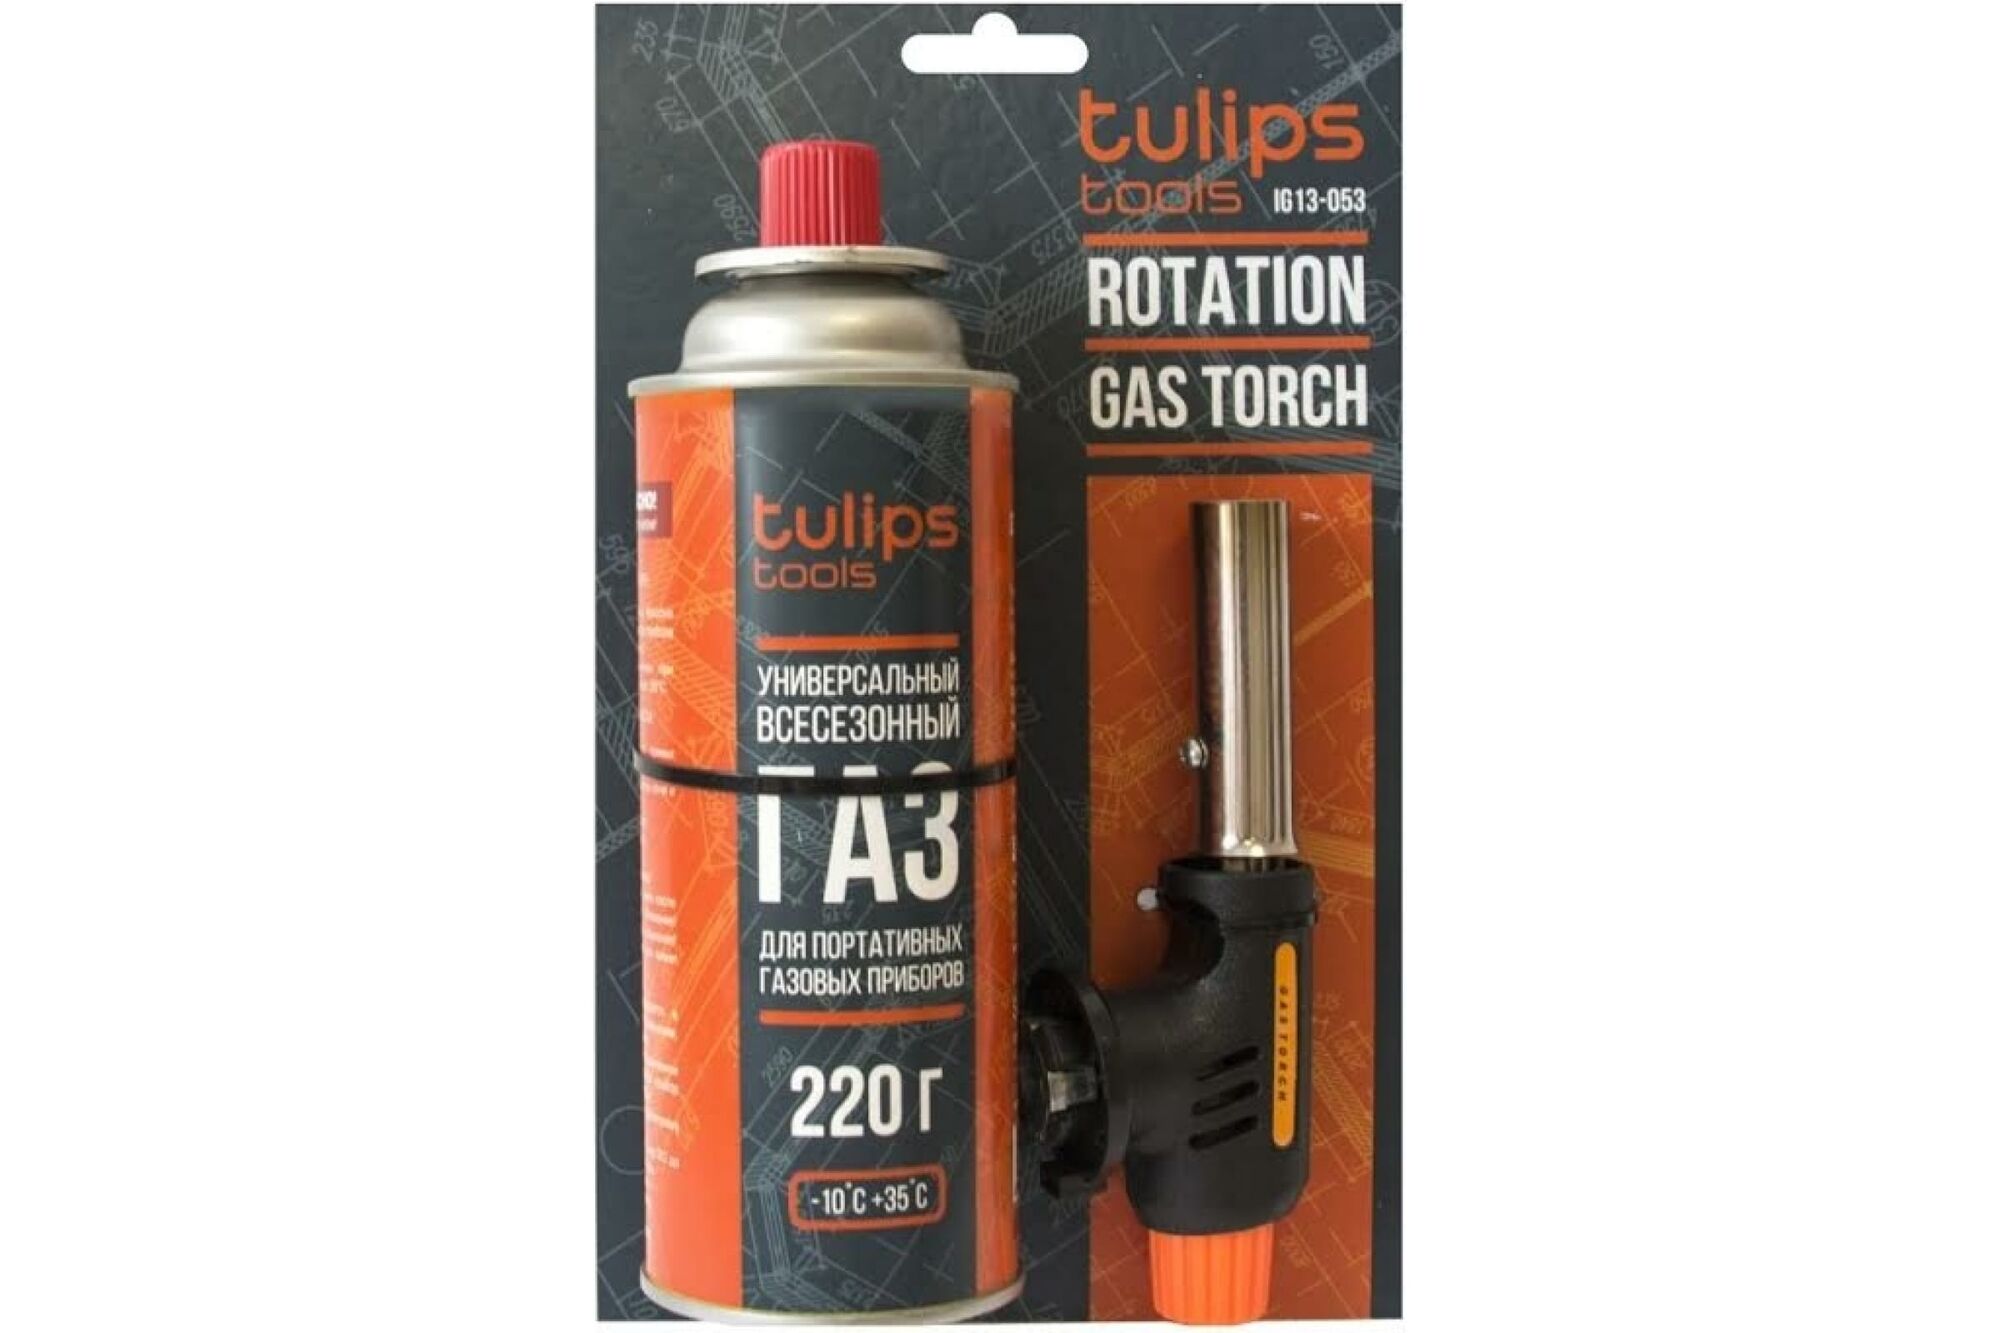 Газовая горелка для free rotation Tulips Tools баллон в комплекте IG13-053 Tulips tools